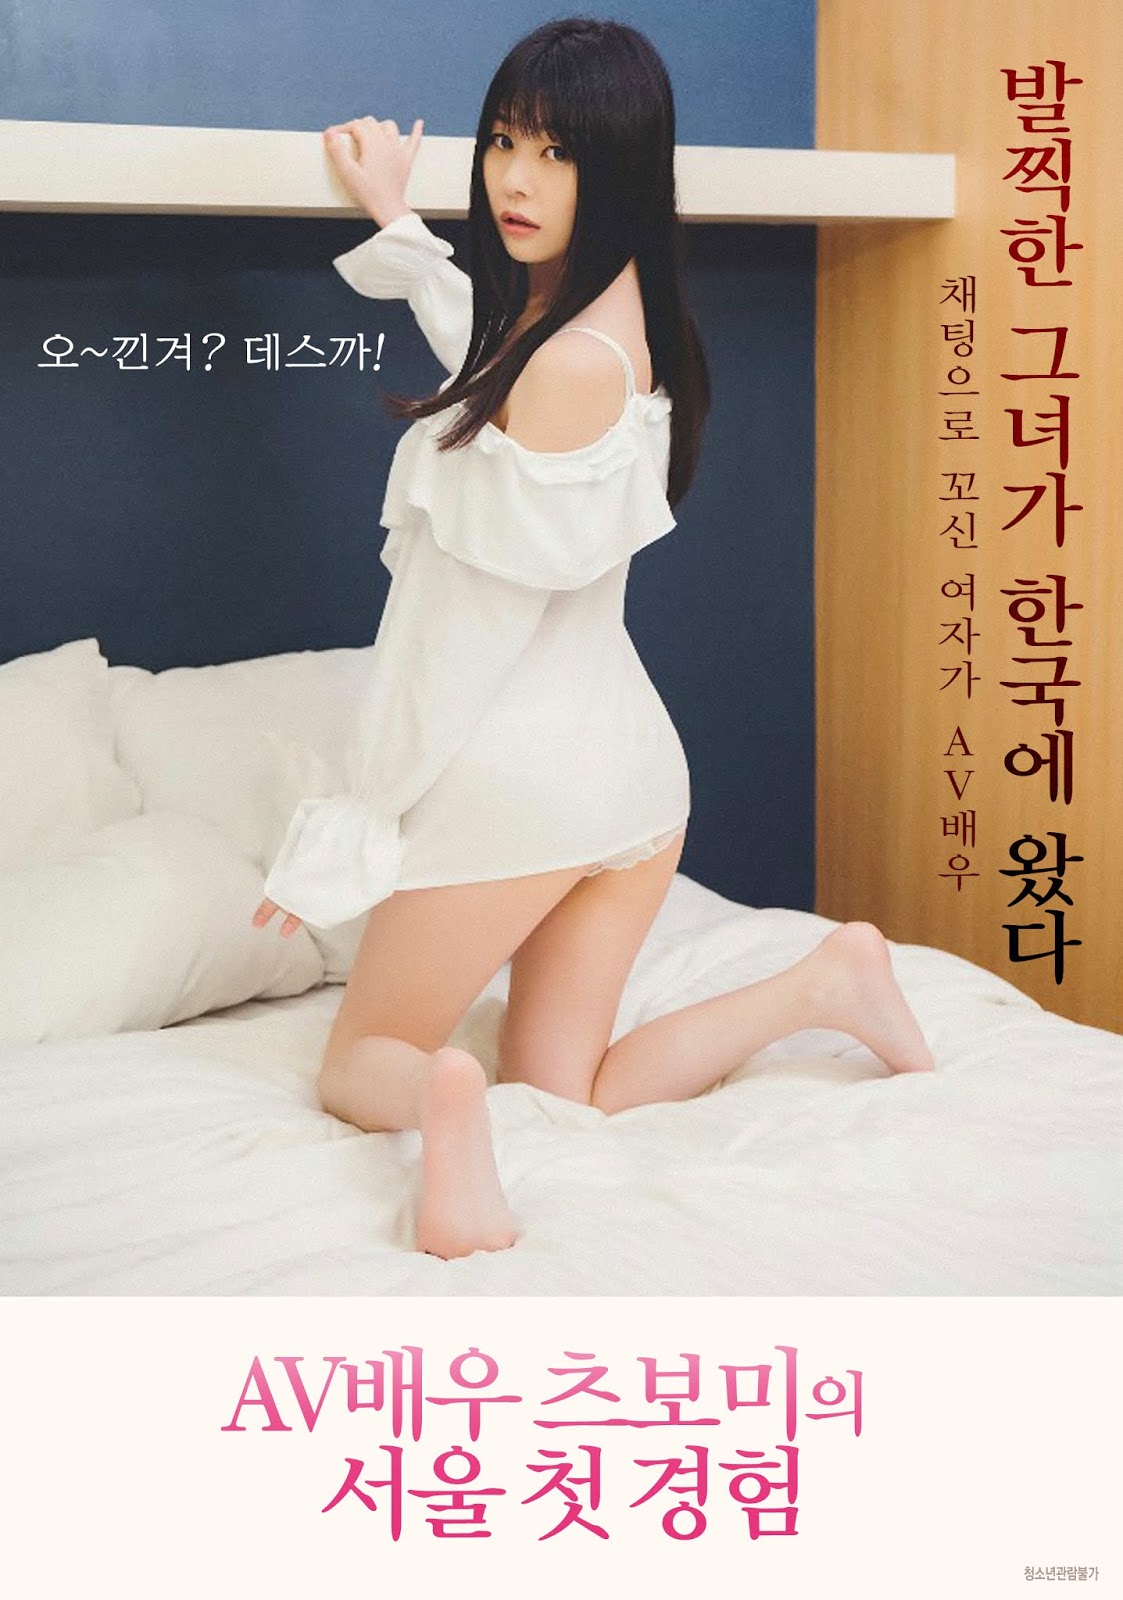 AV Actress Tsubomi Seoul First Experience 1 Full Korea 18+ Adult Movie Online Free